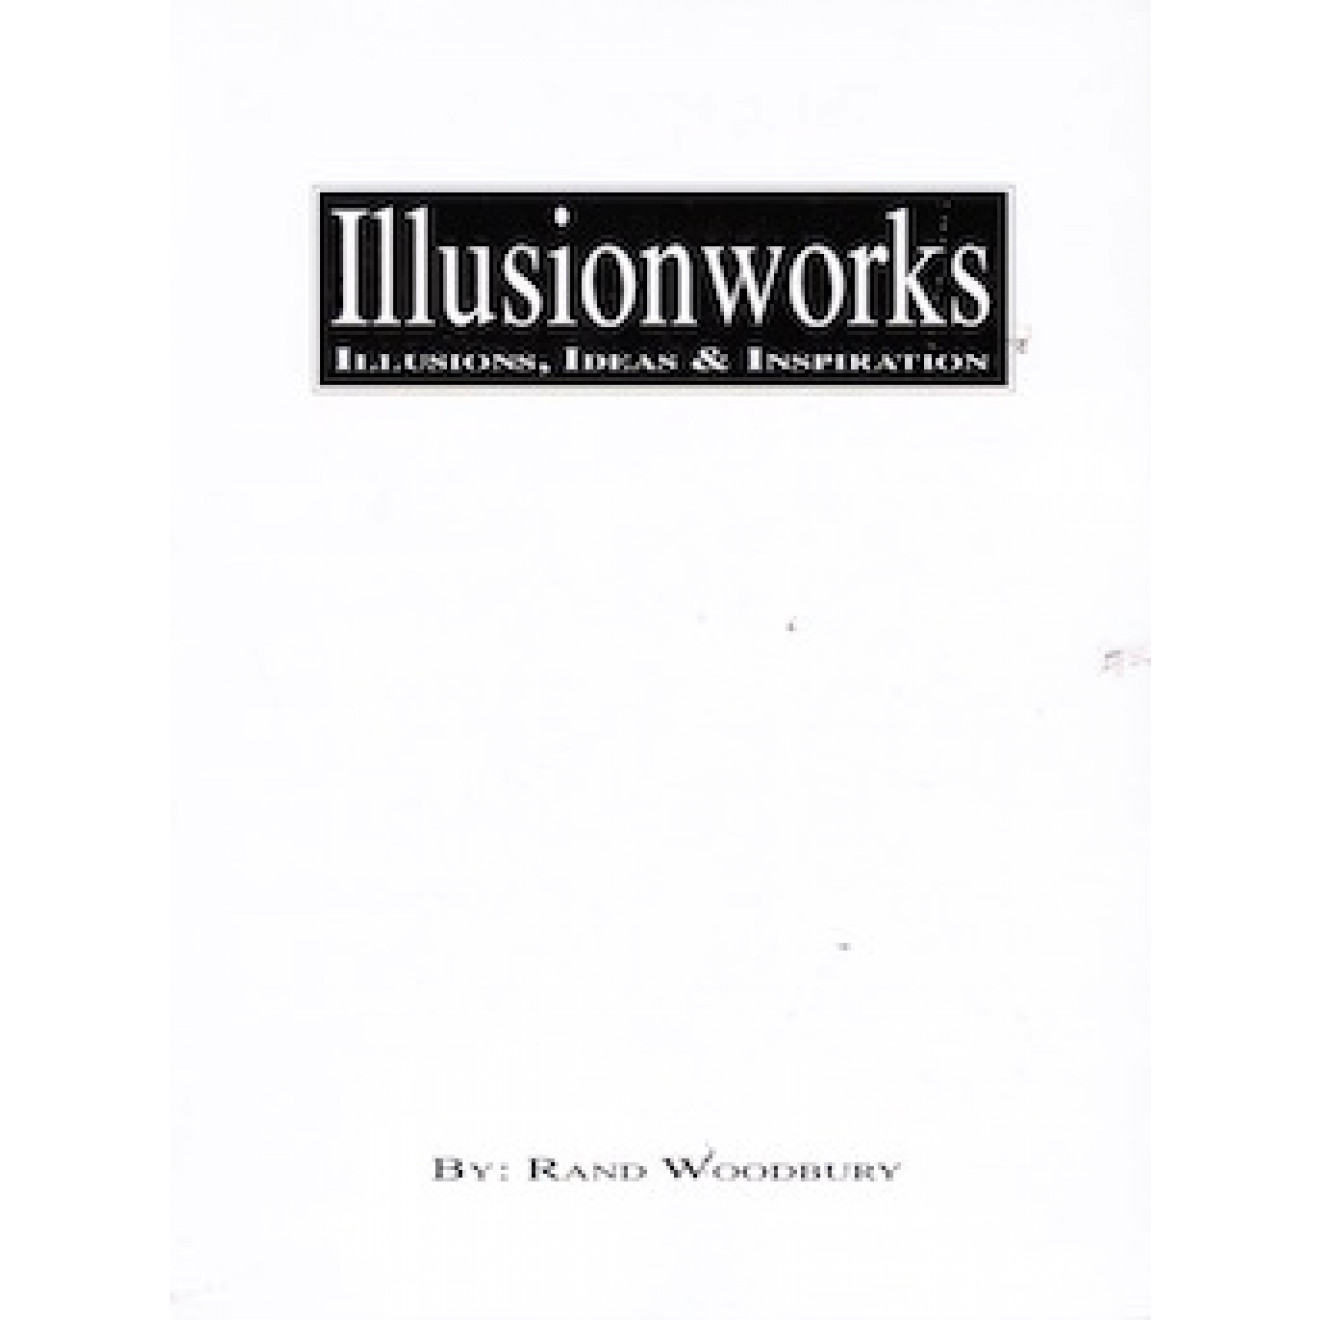 Illusionworks - Illusions, Ideas & Inspiration